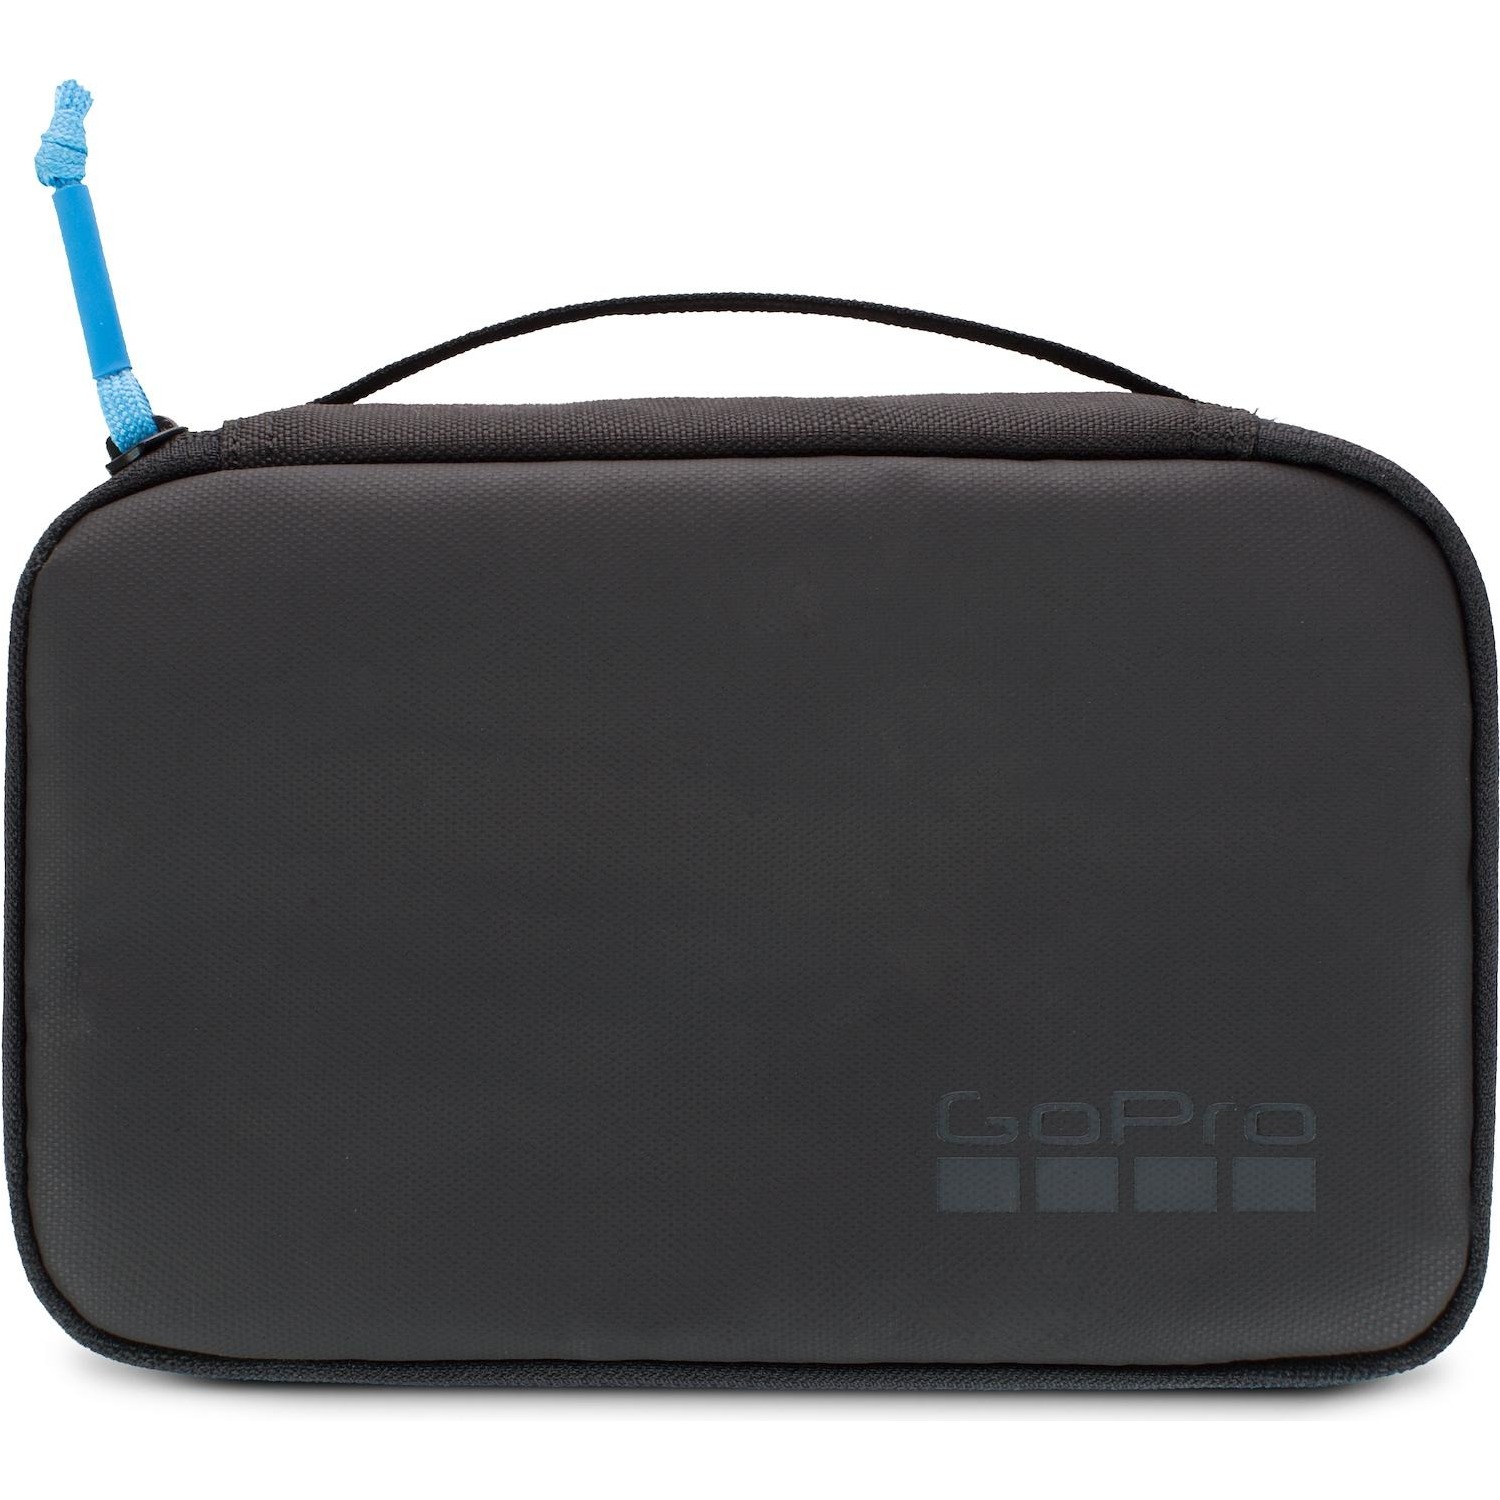 Immagine per Campervan valigetta Gopro soft per camera         accessori e ricambi da DIMOStore